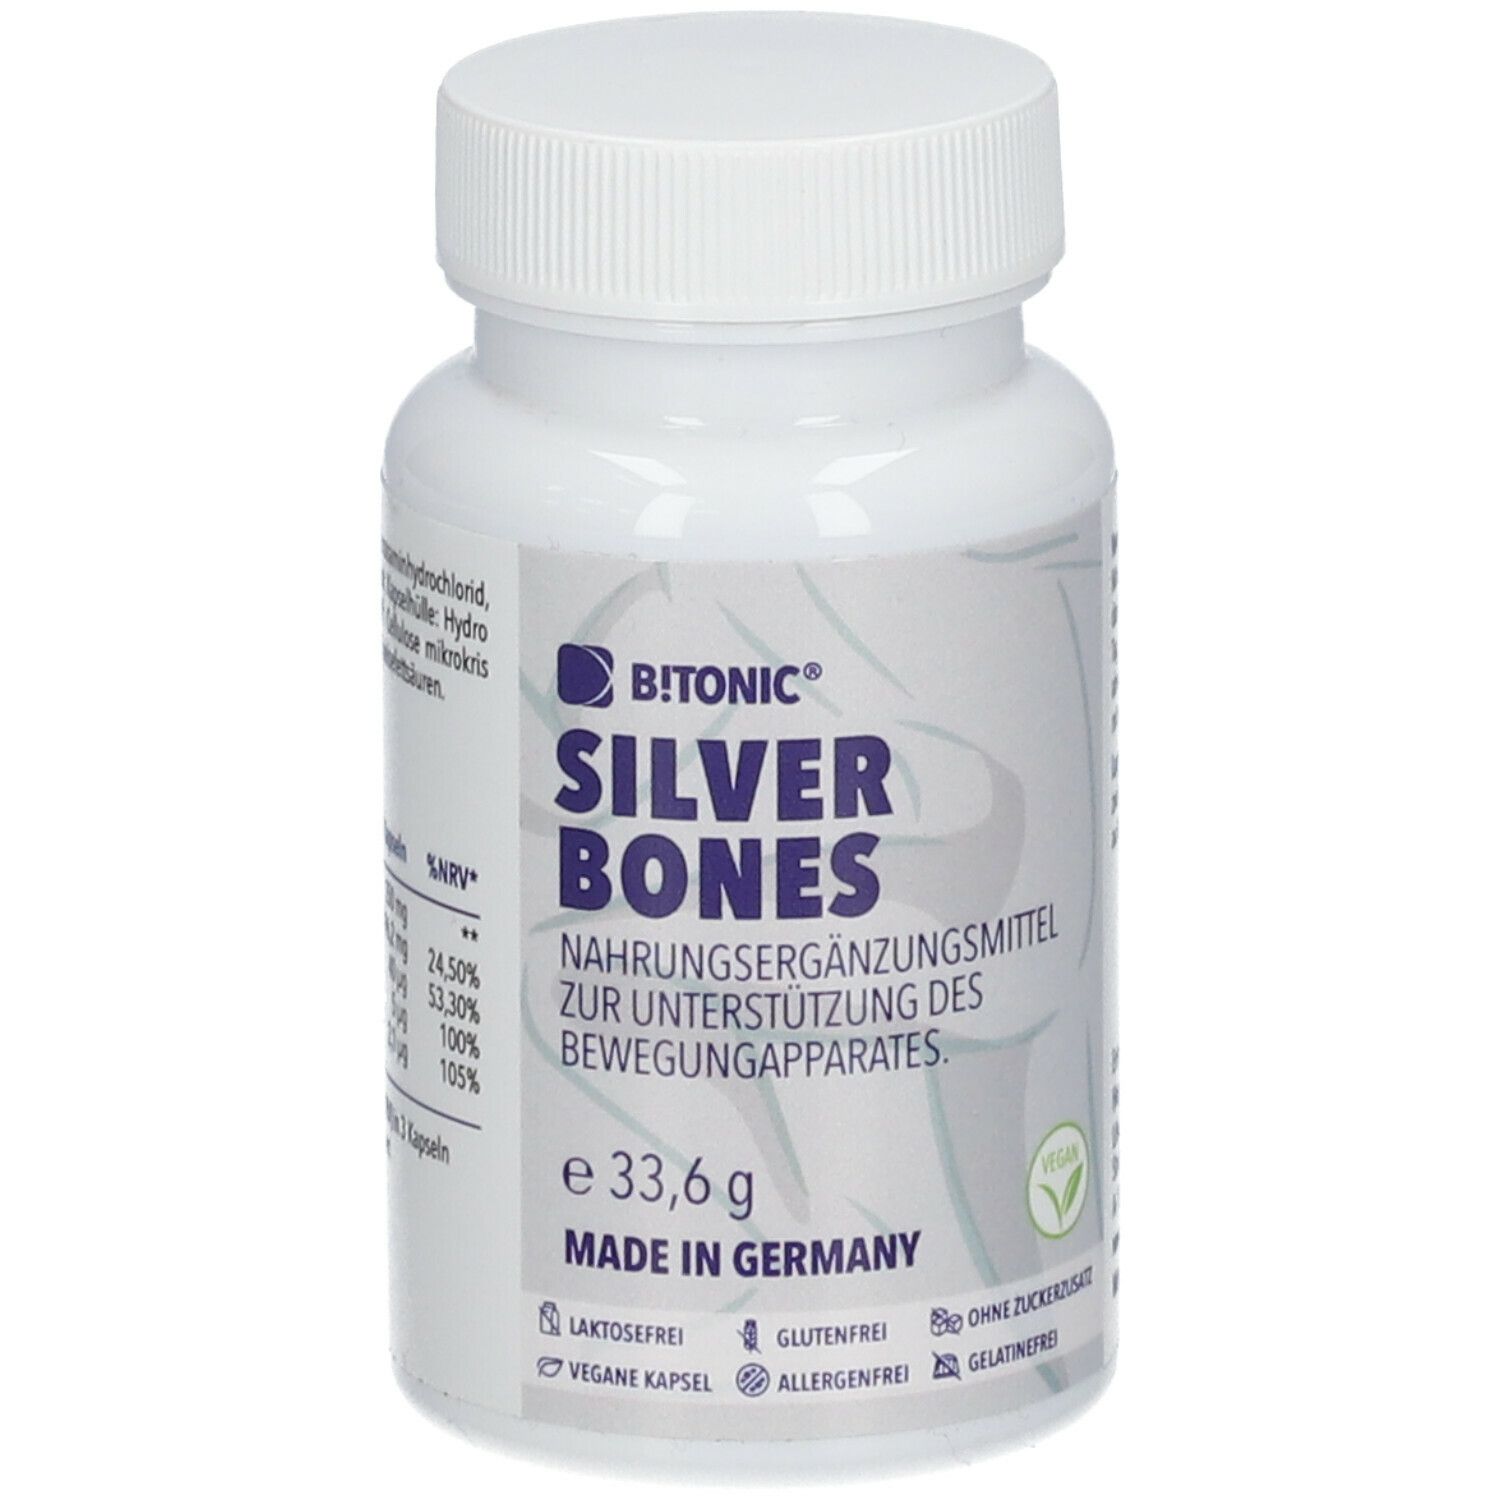 Image of B!TONIC® Silver Bones